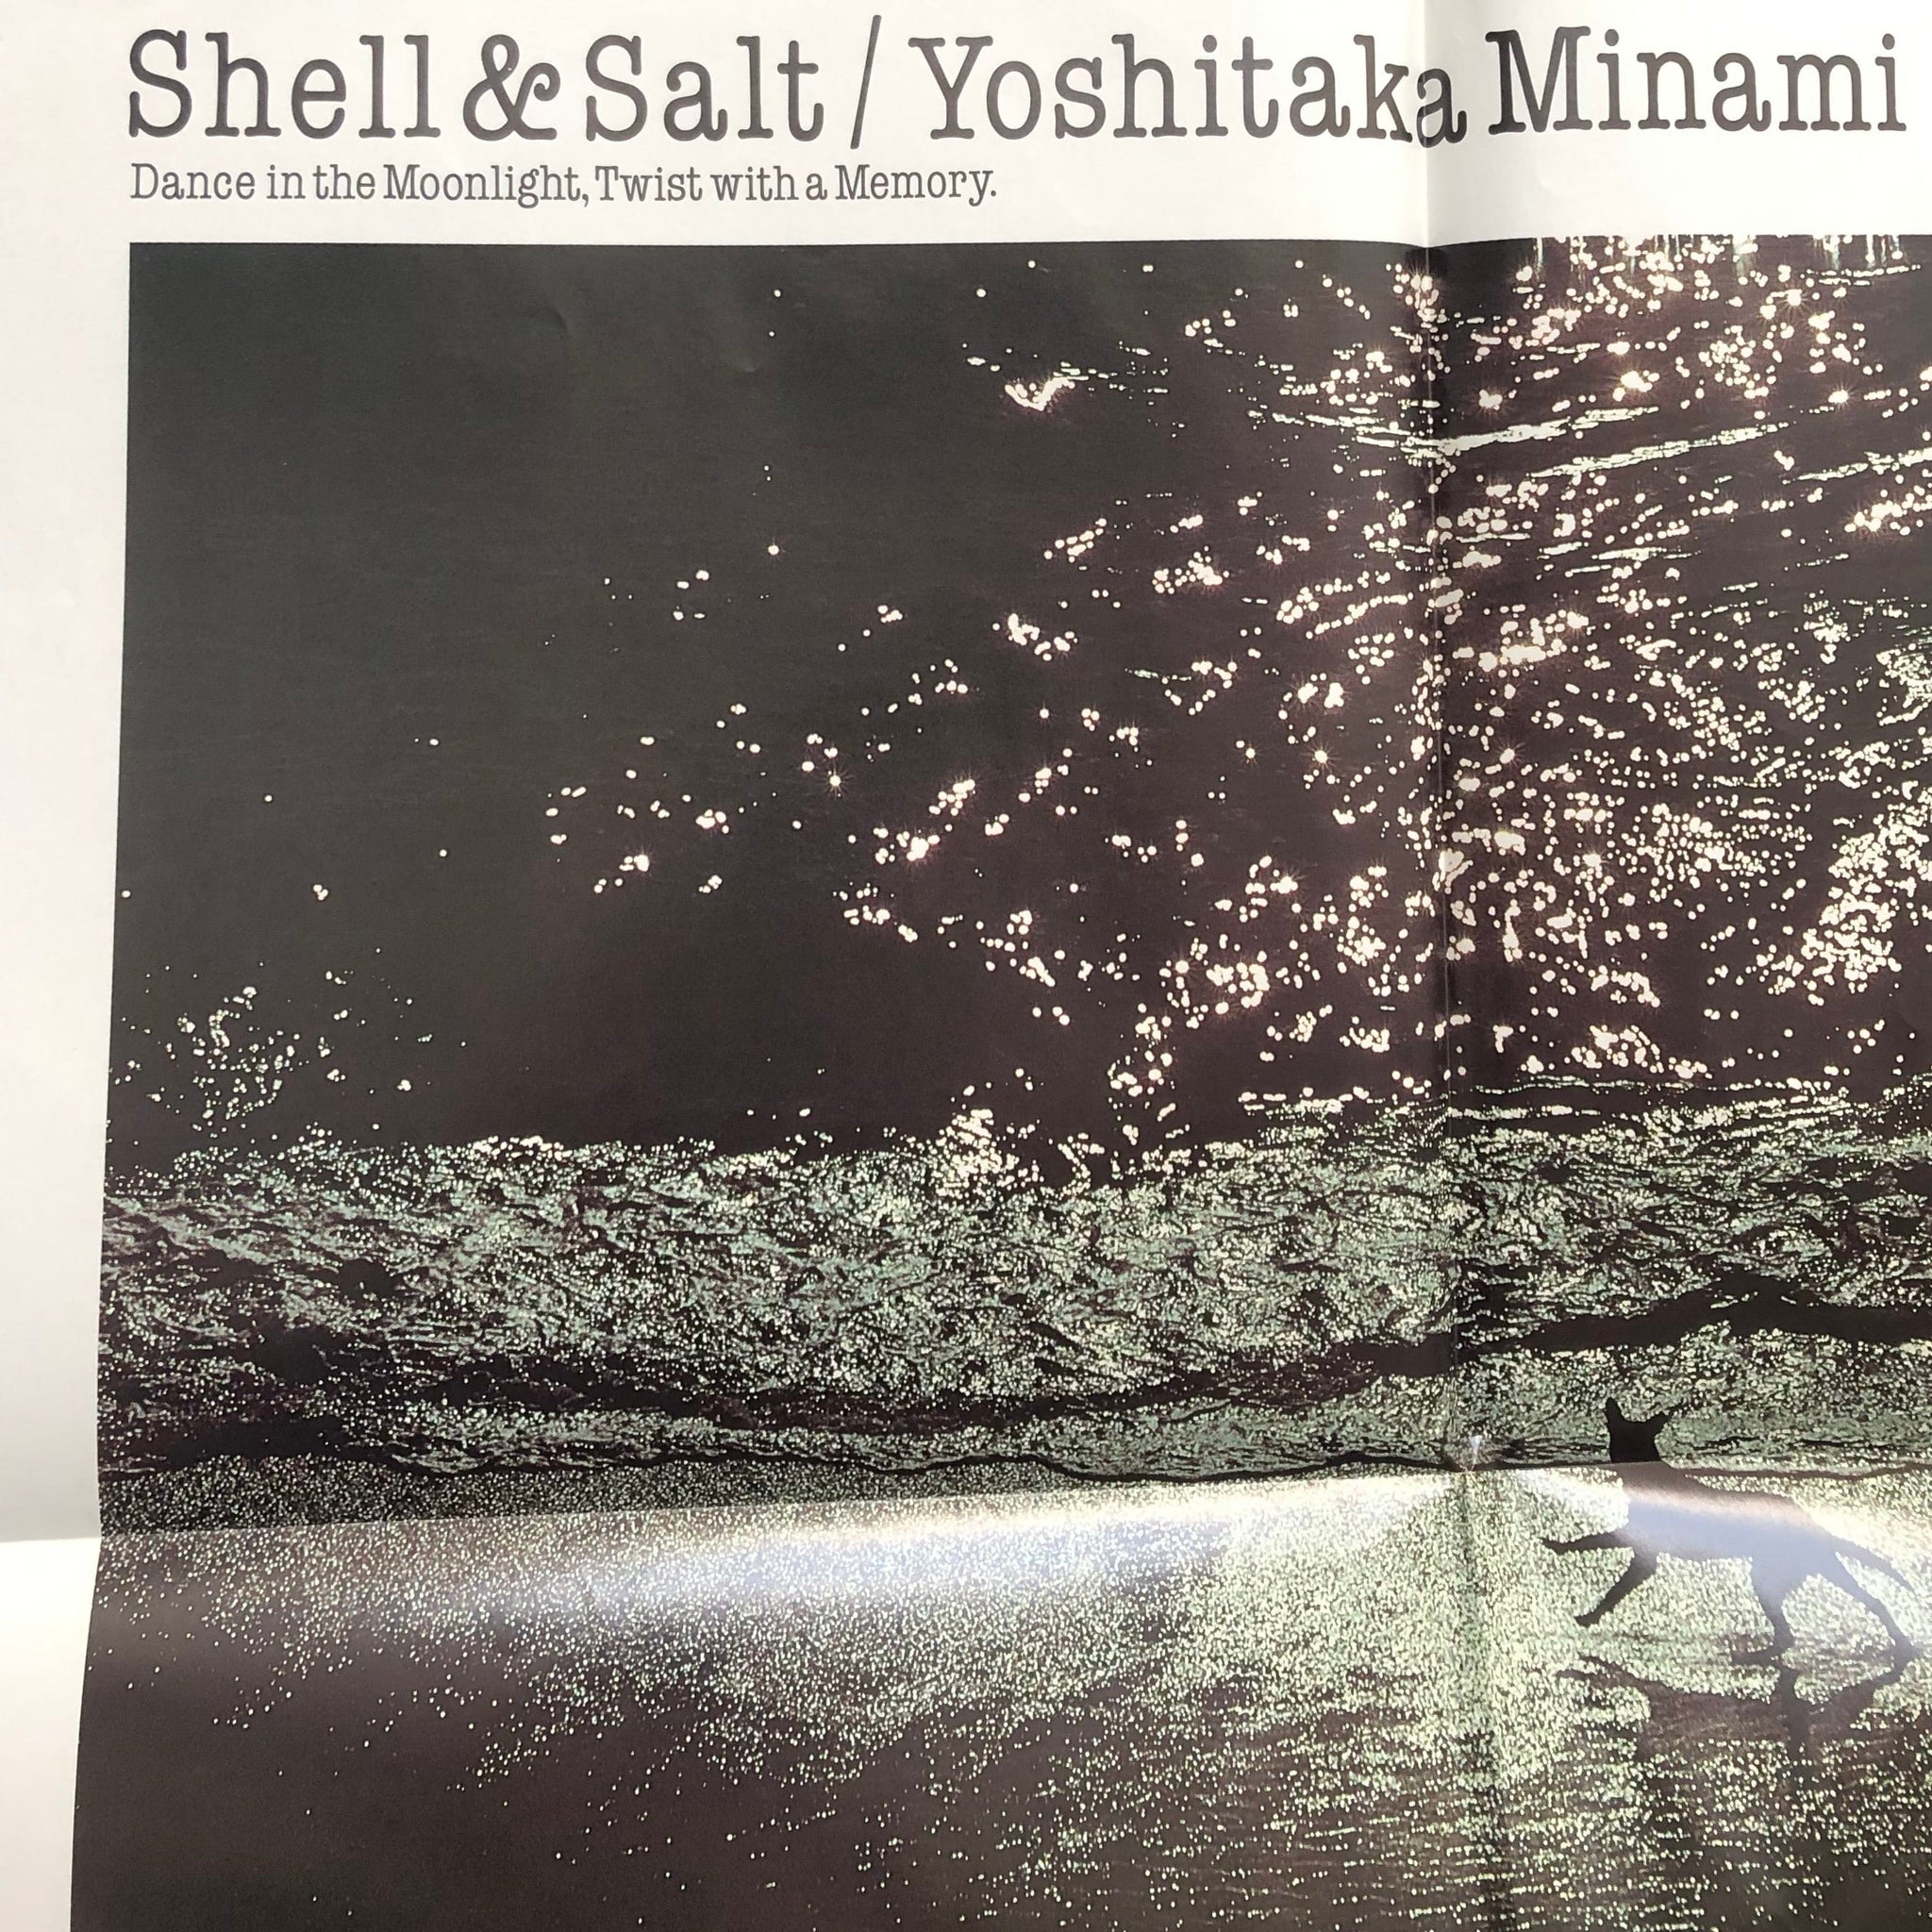 Yoshitaka Minami - "Shell & Salt - Dance in the Moonlight, Twist with a Memory.", 1982